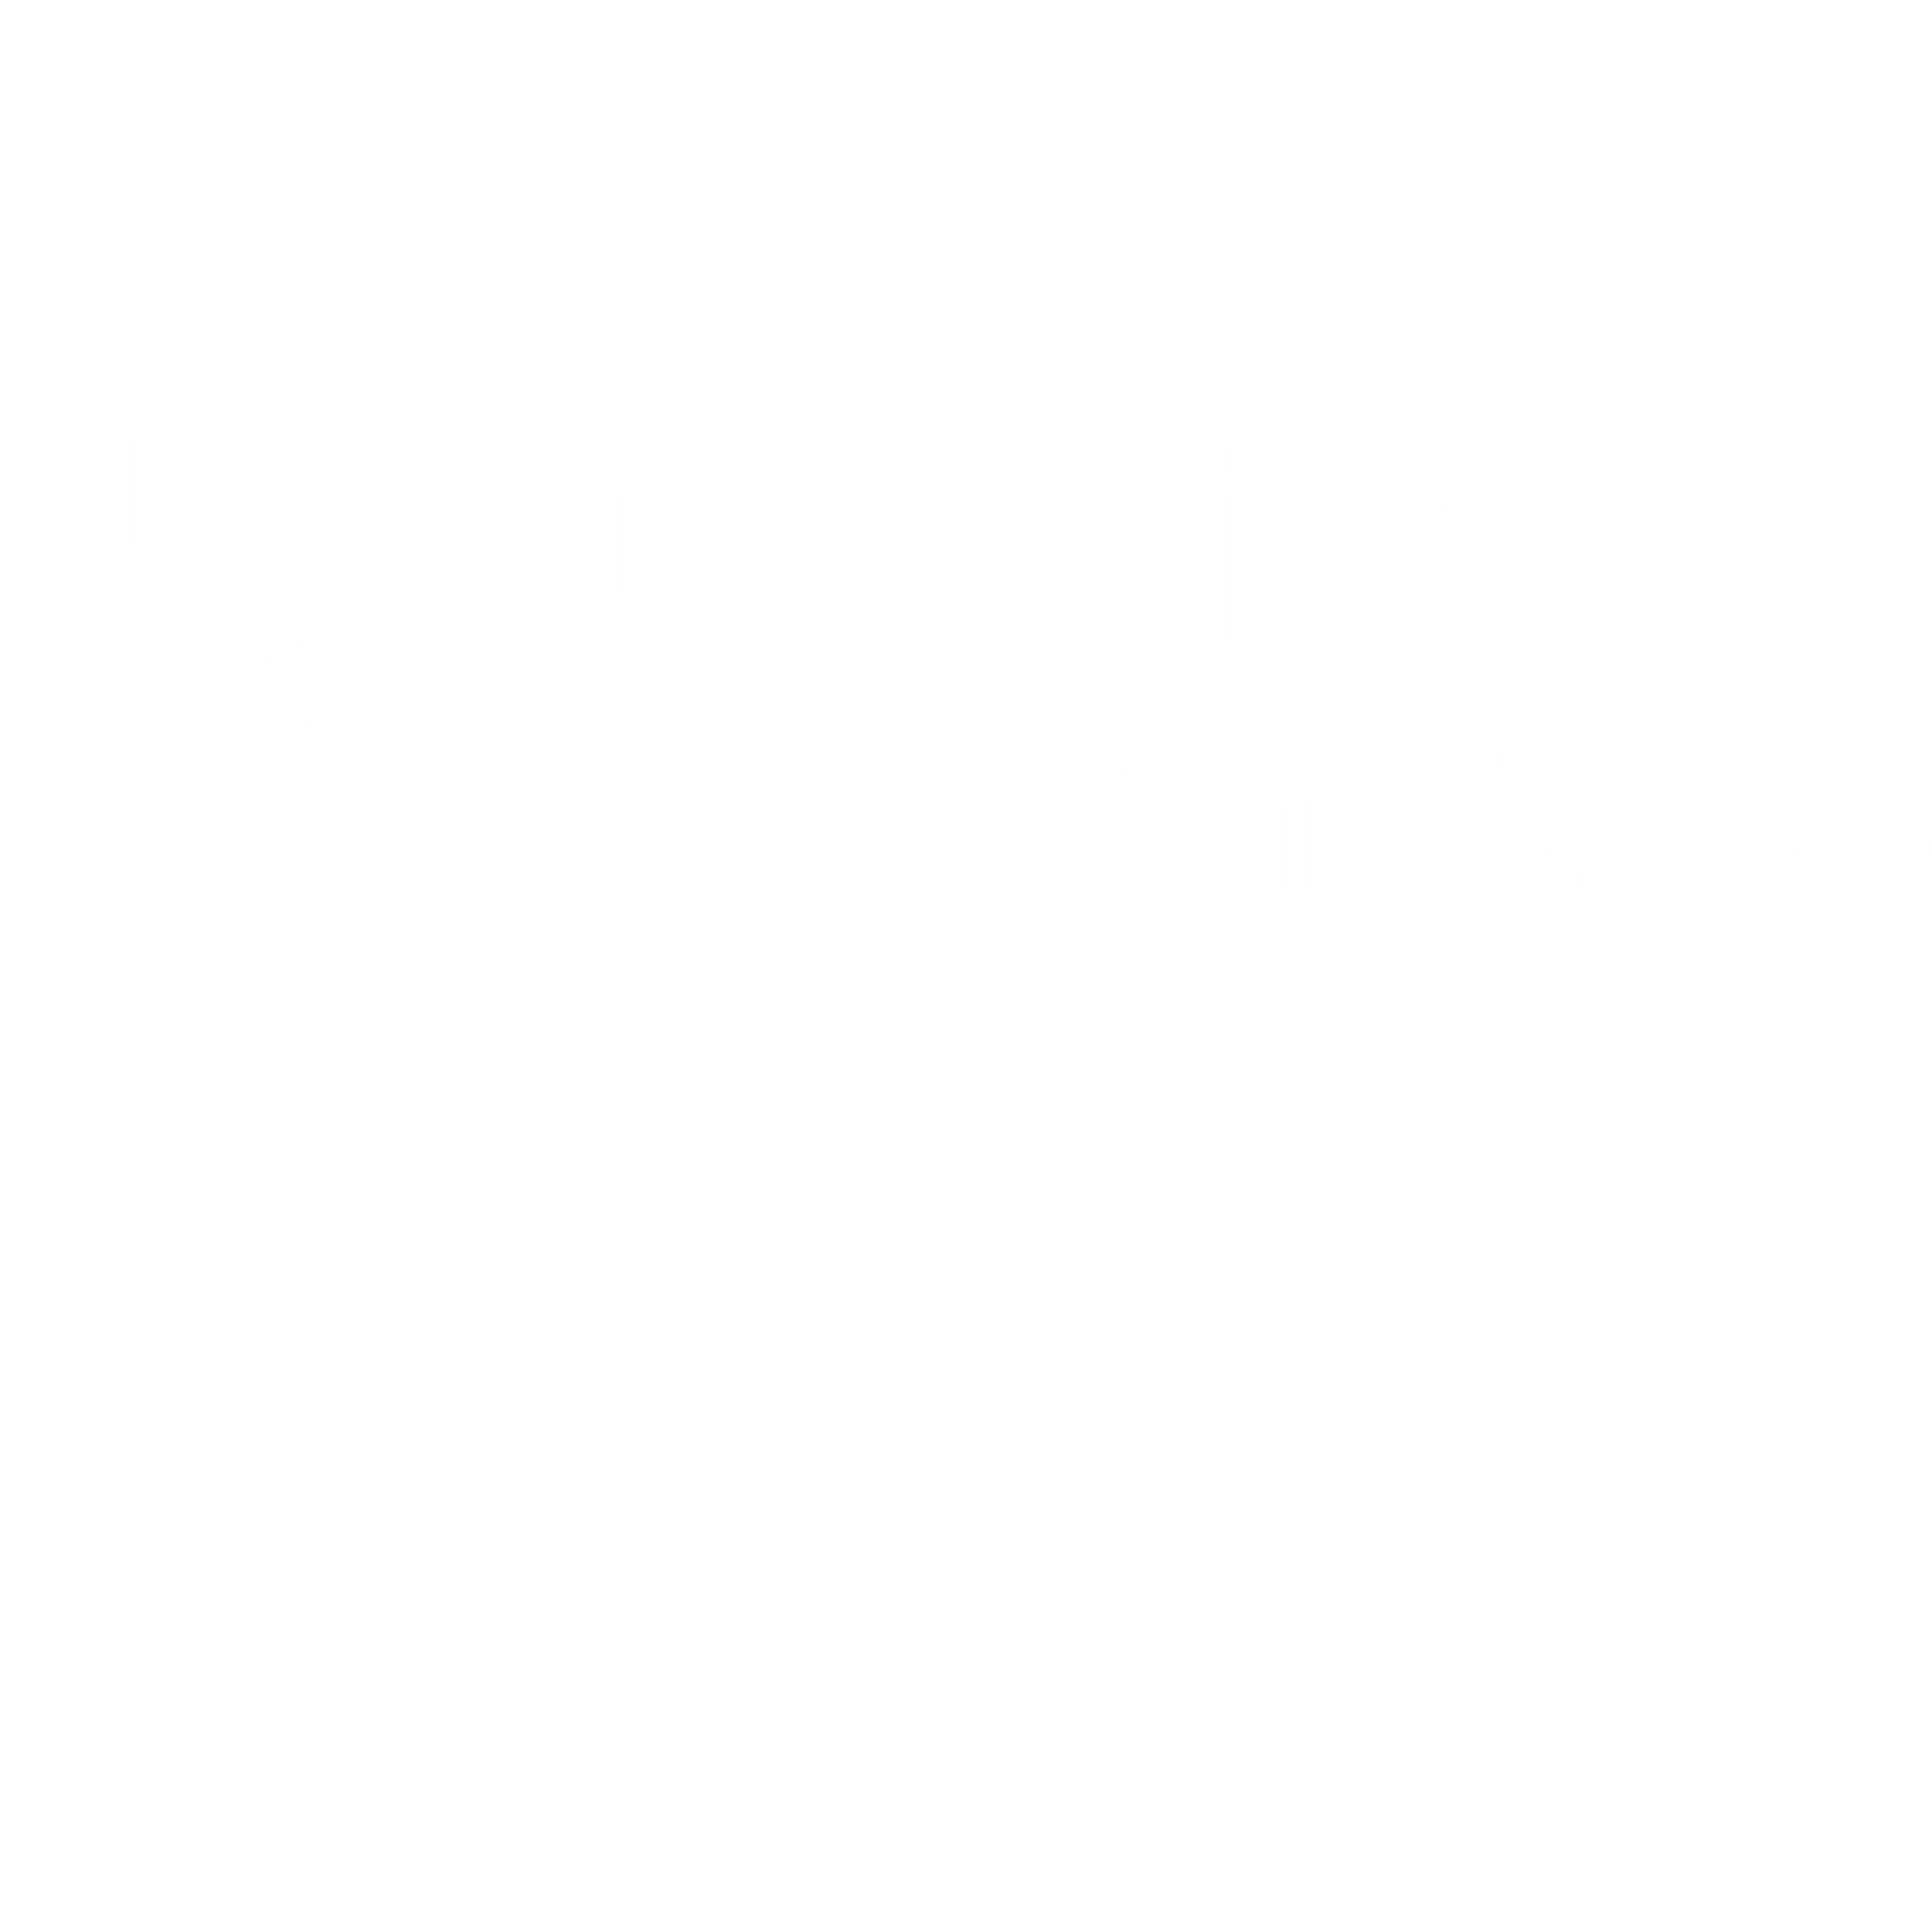 Turkish Cosmetics